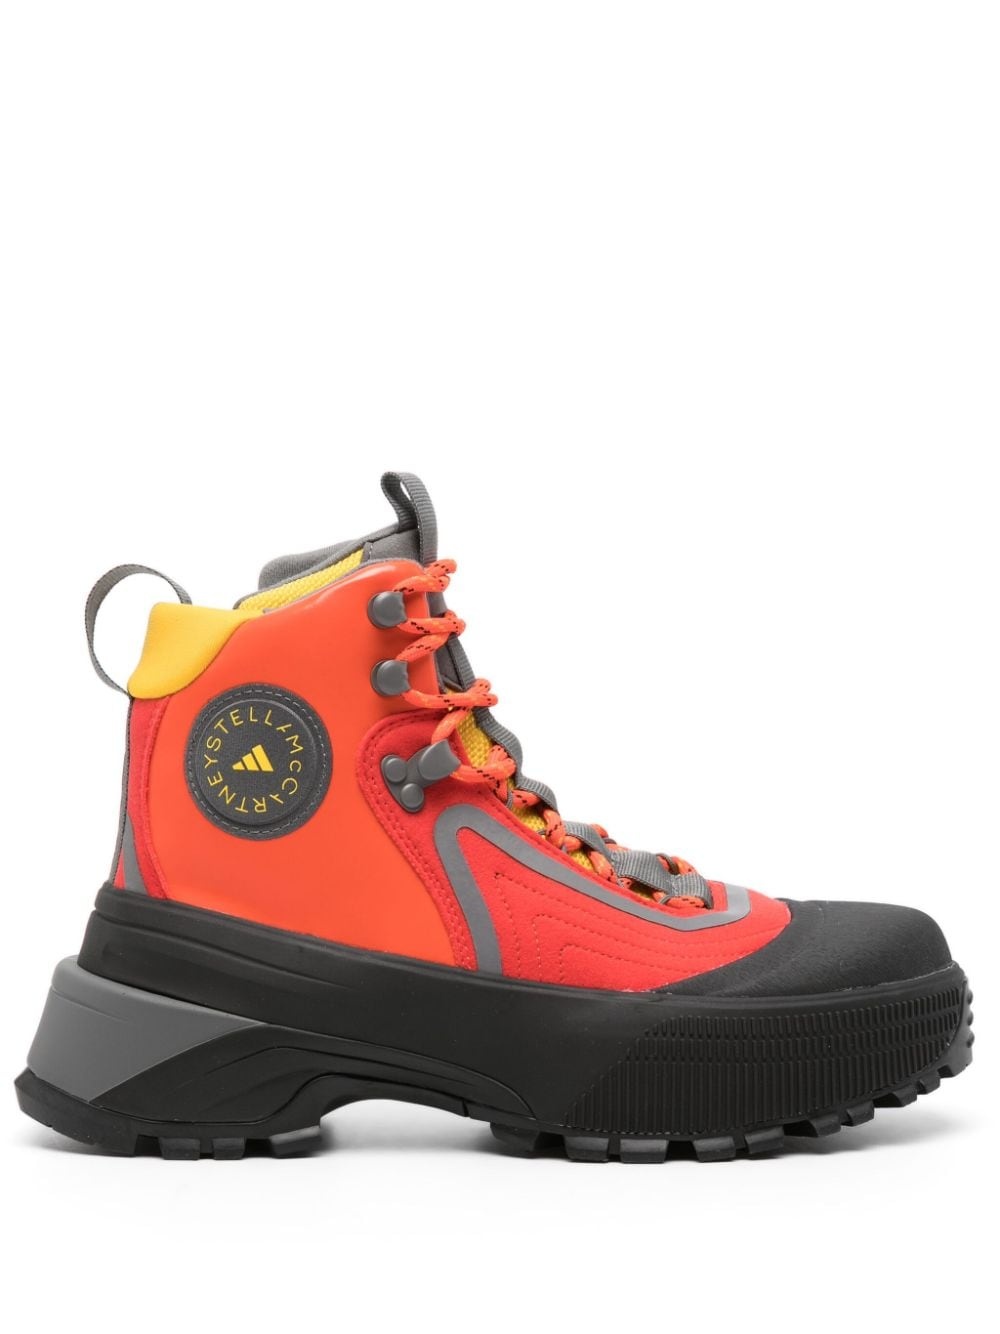 Terrex hiking boots - 1